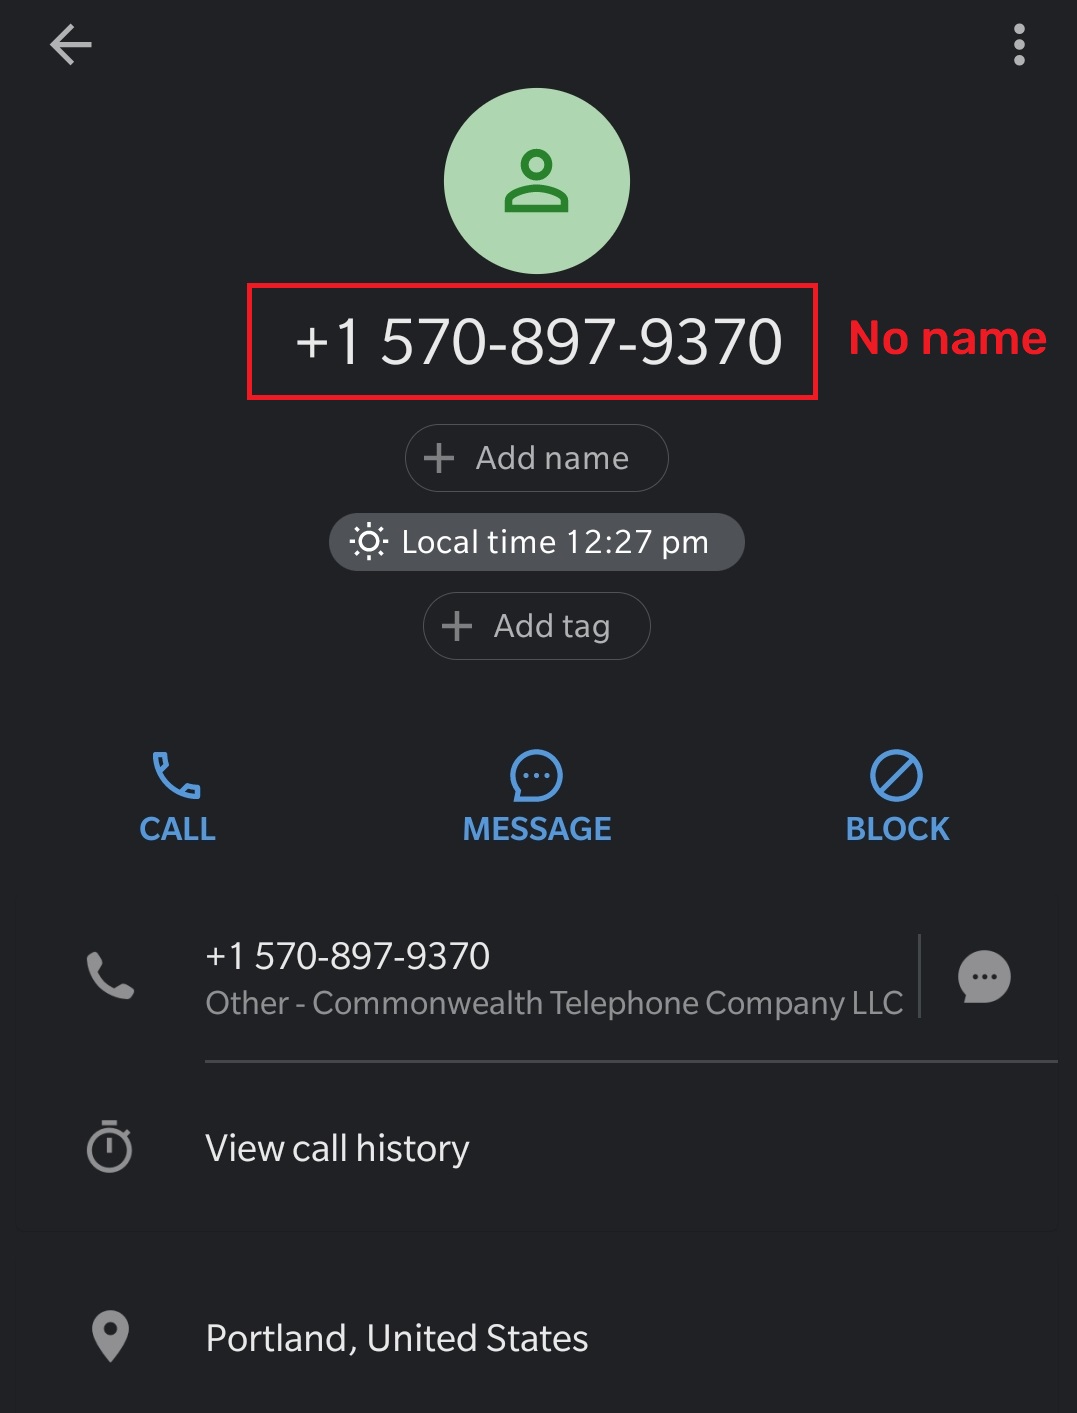 easytypingjob scam fake phone number 1